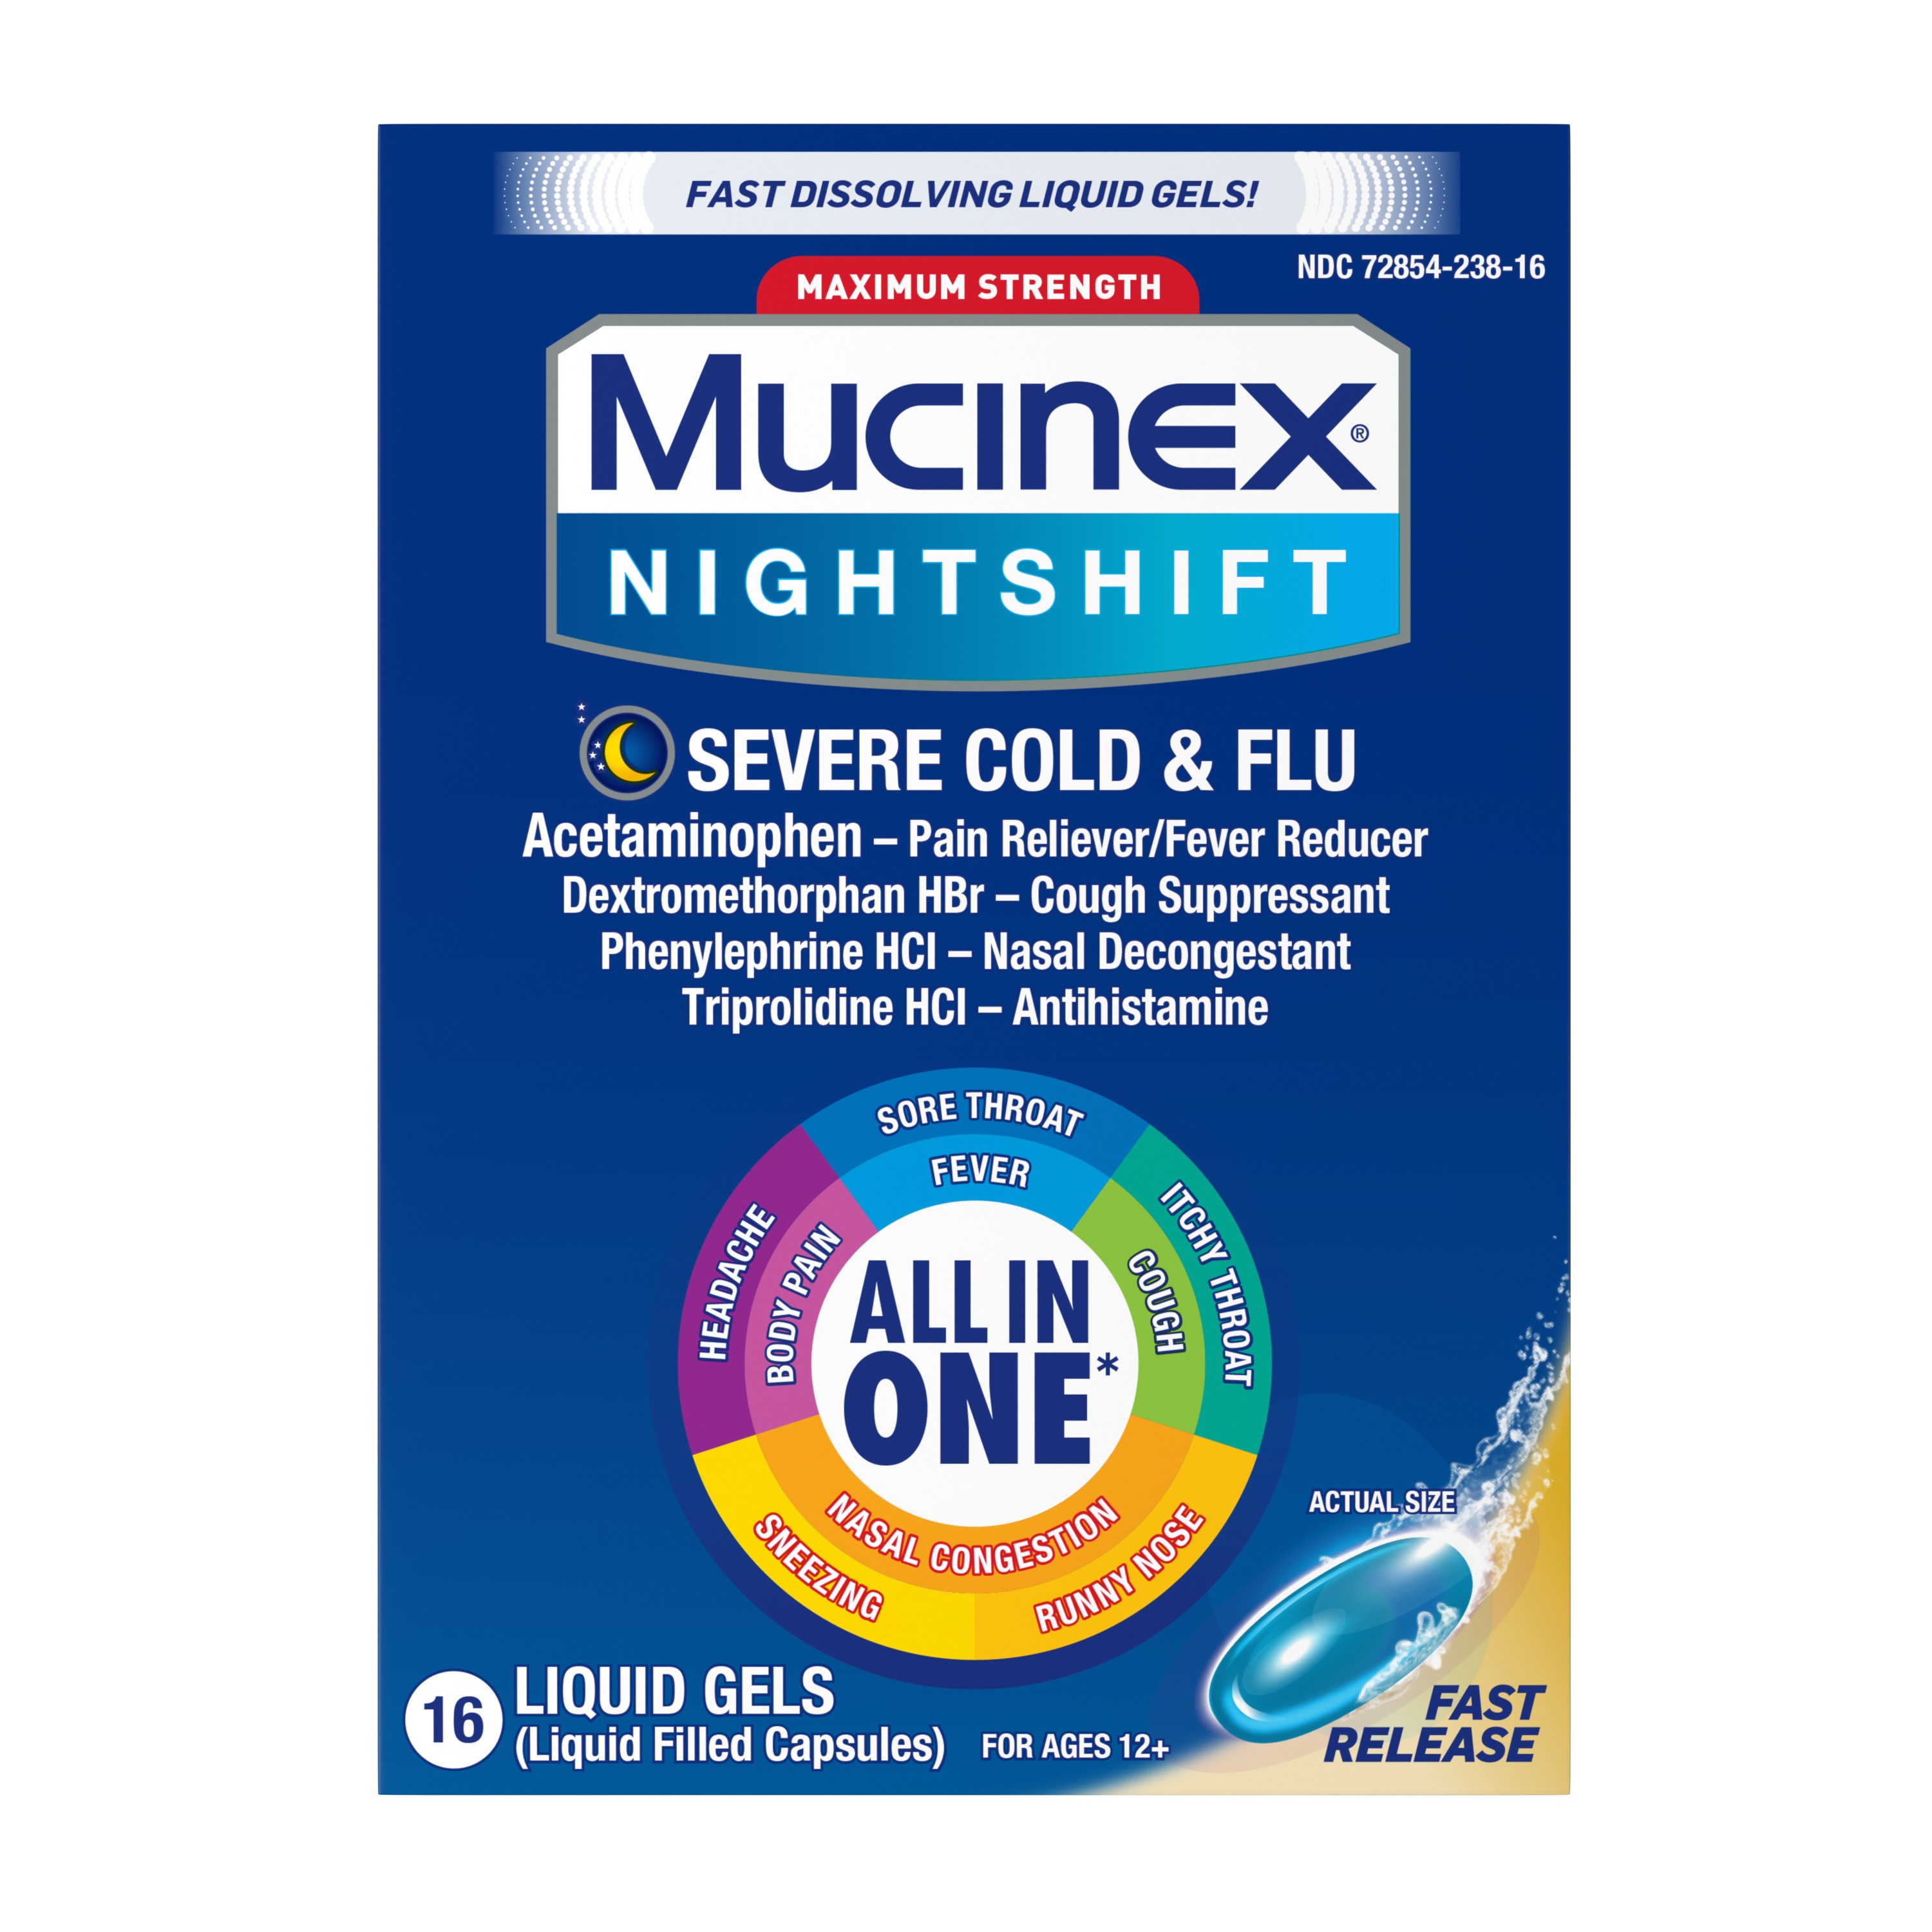 MUCINEX FASTMAX Nightshift Severe Cold  Flu Fast Release Liquid Gels